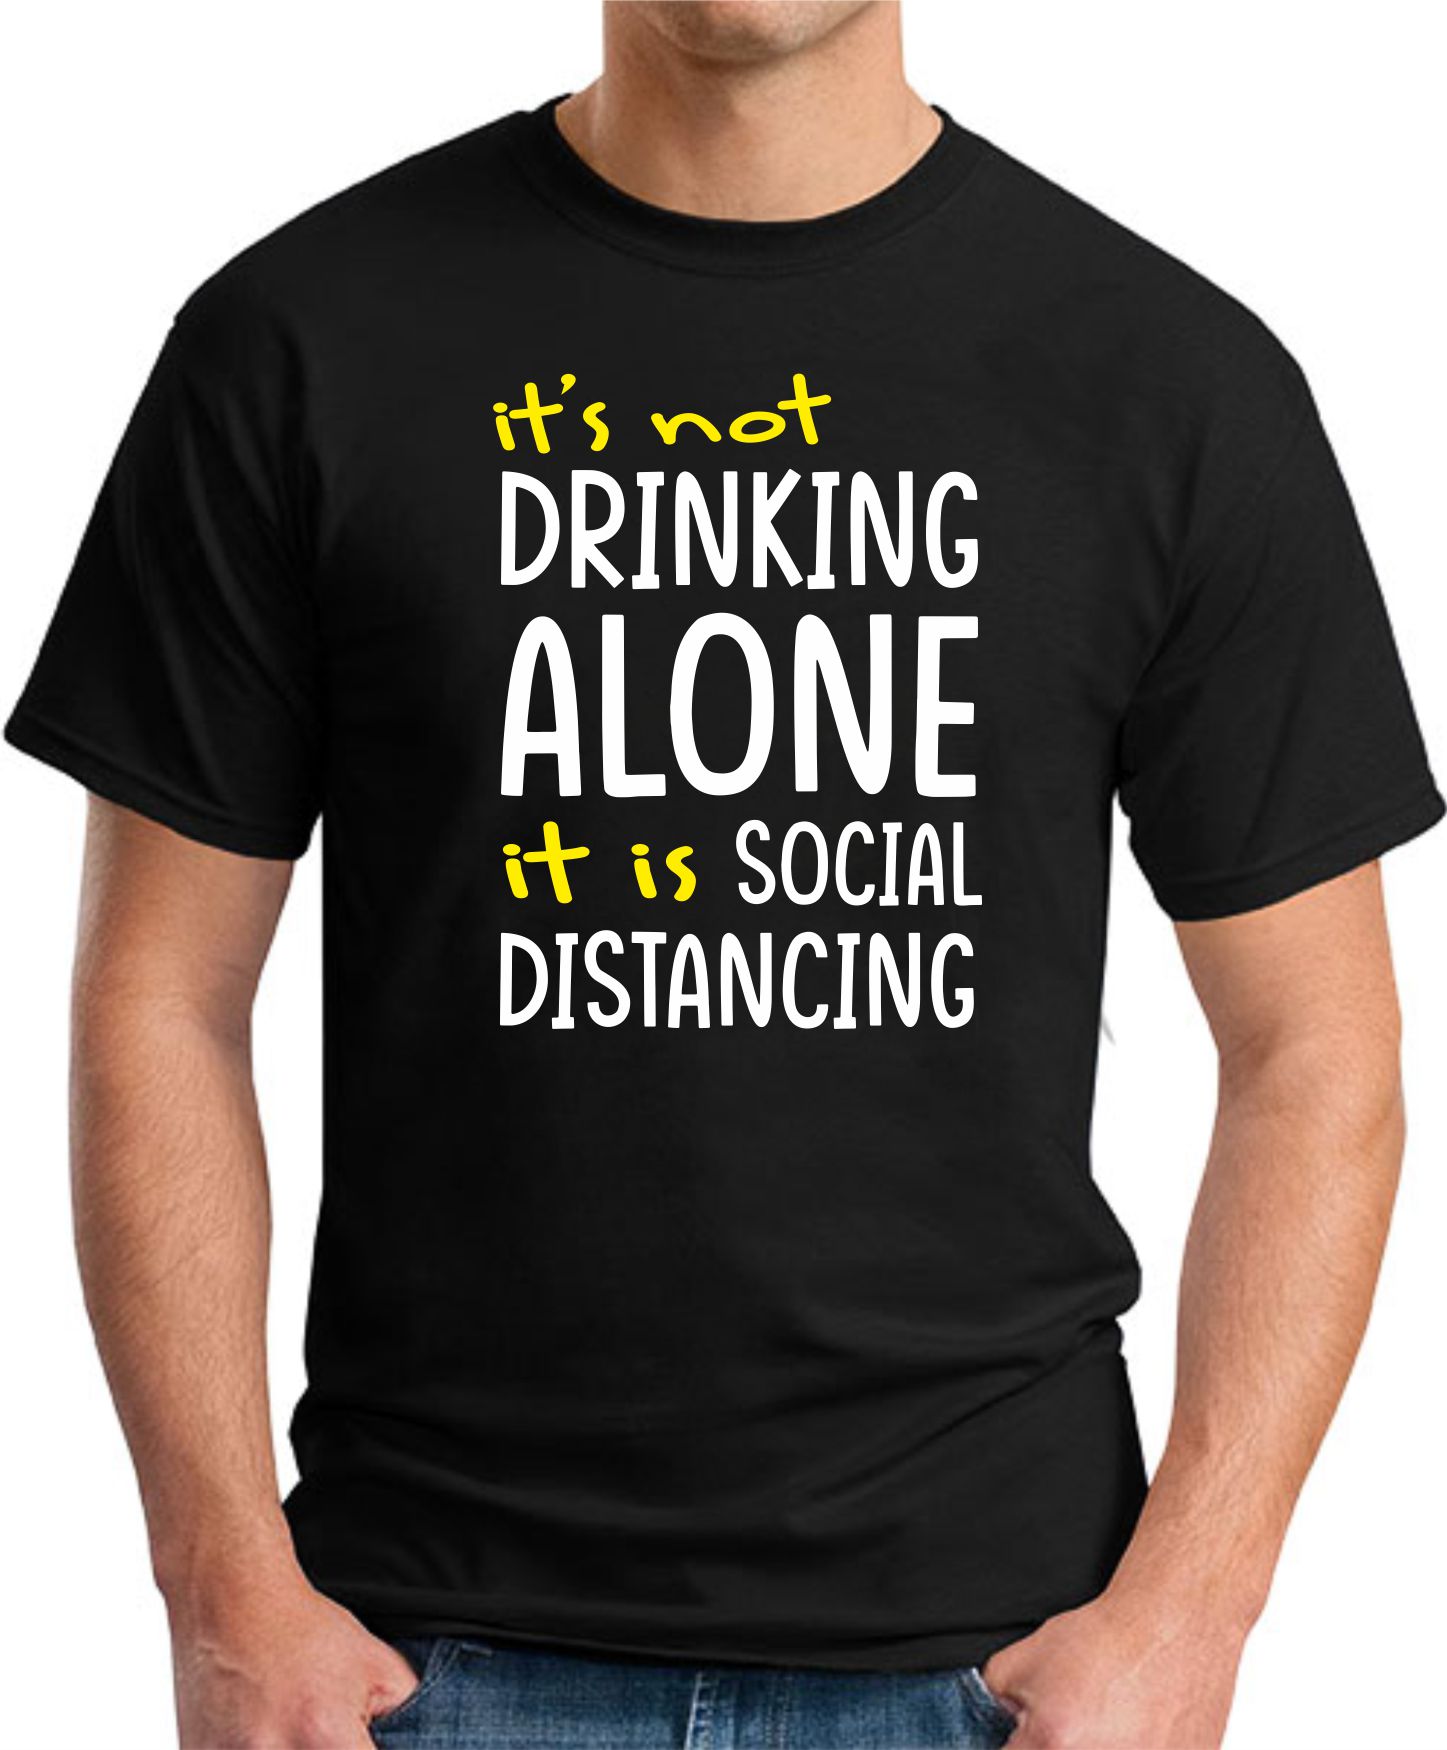 IT'S NOT DRINKING ALONE IT'S SOCIAL DISTANCING BLACK